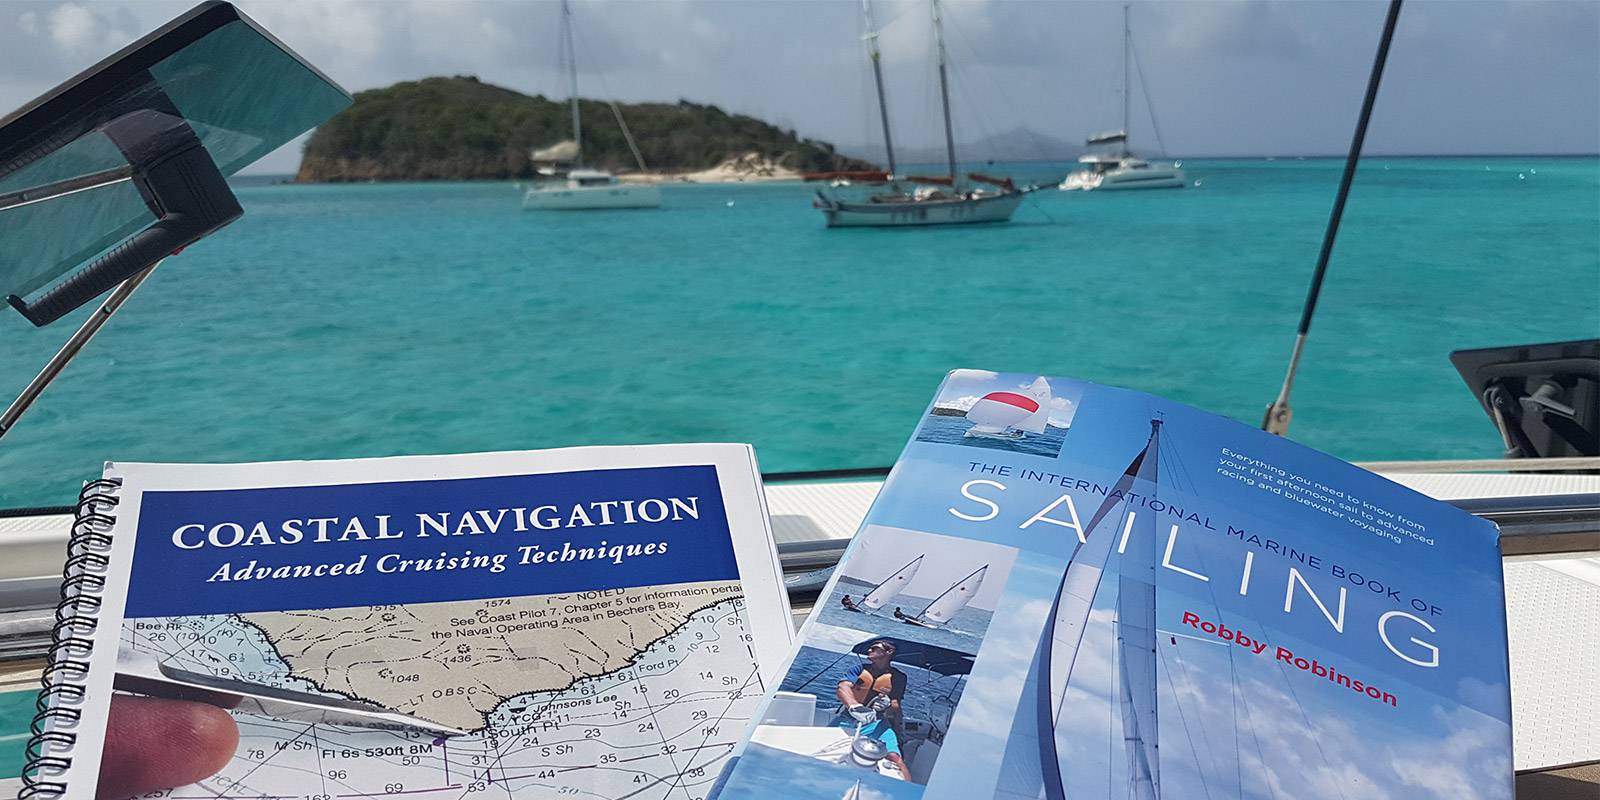 Sailing the Caribbean